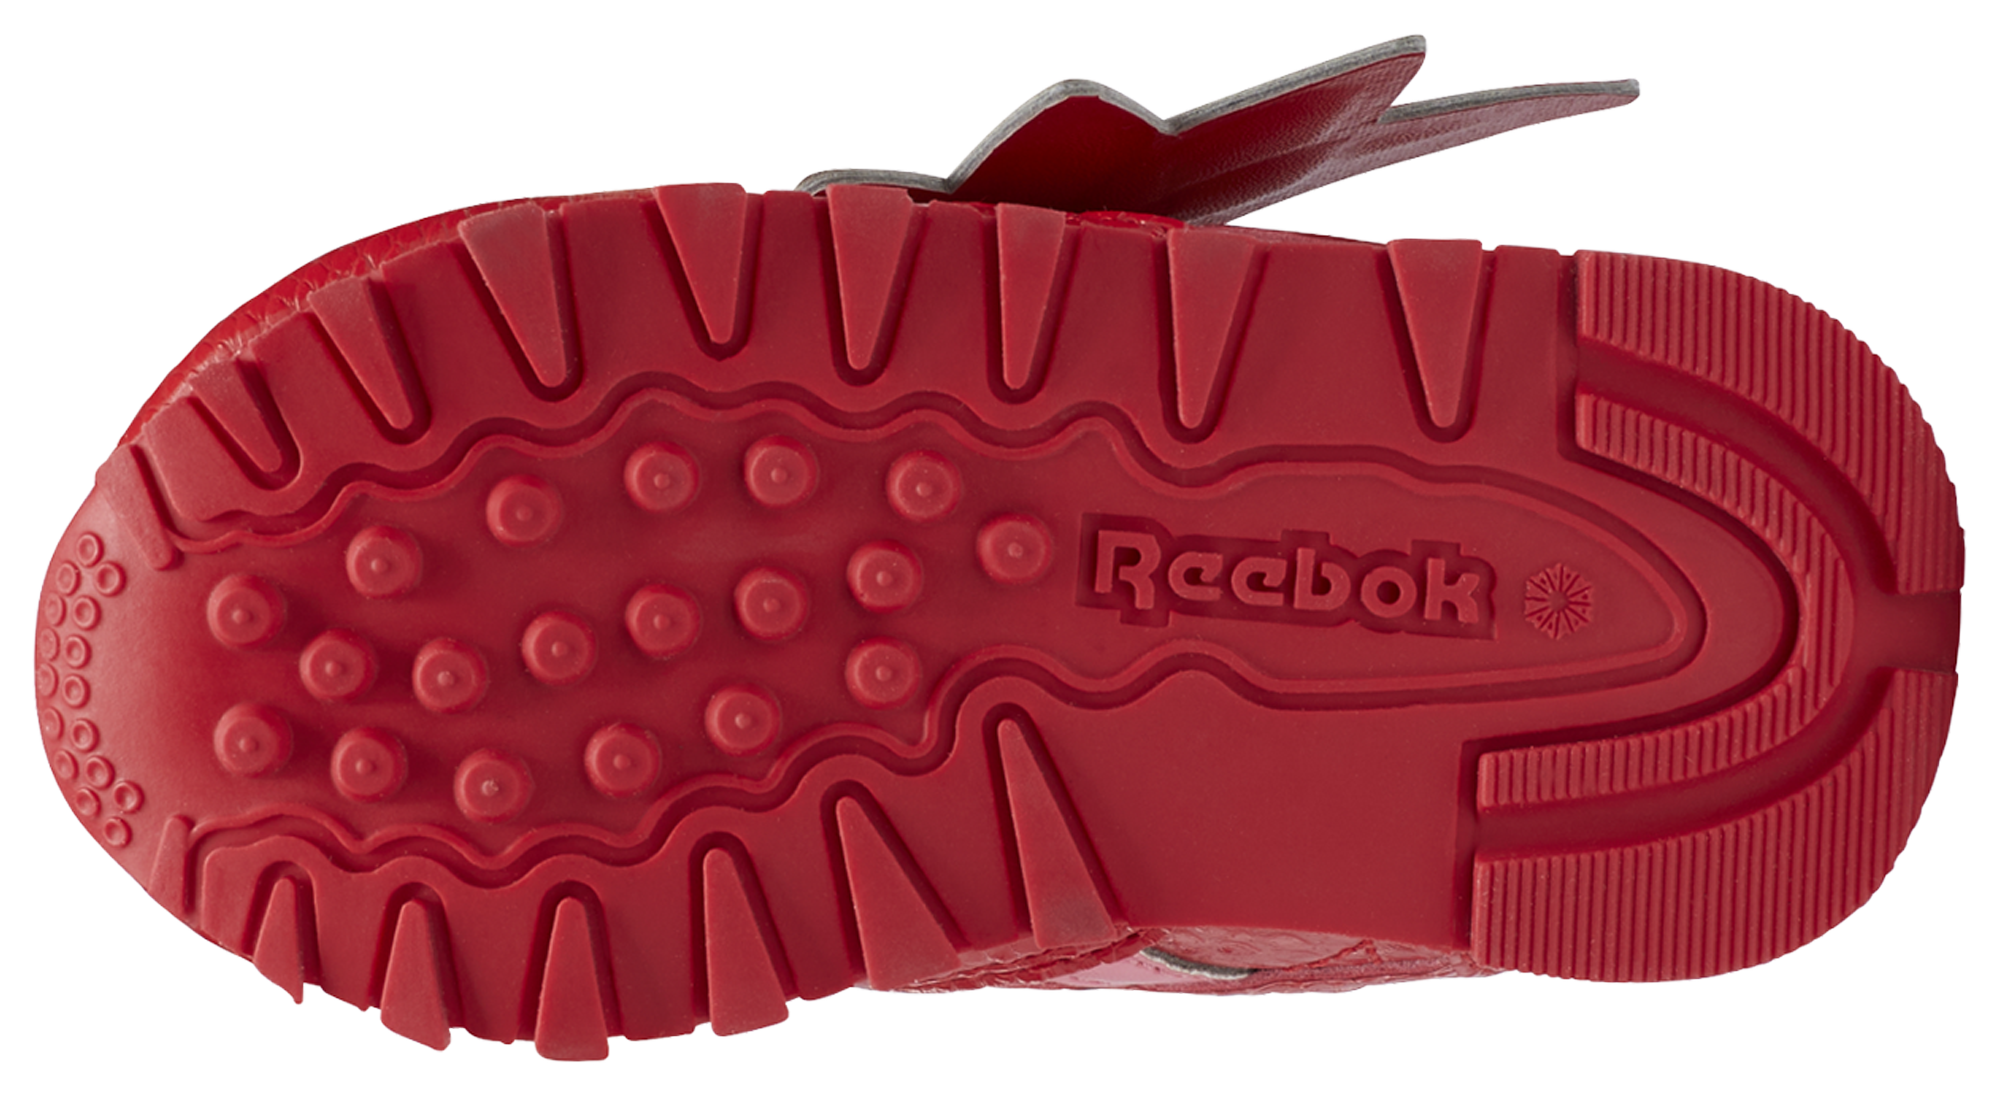 Reebok Classic Leather x PJ Mask - Girls' Toddler